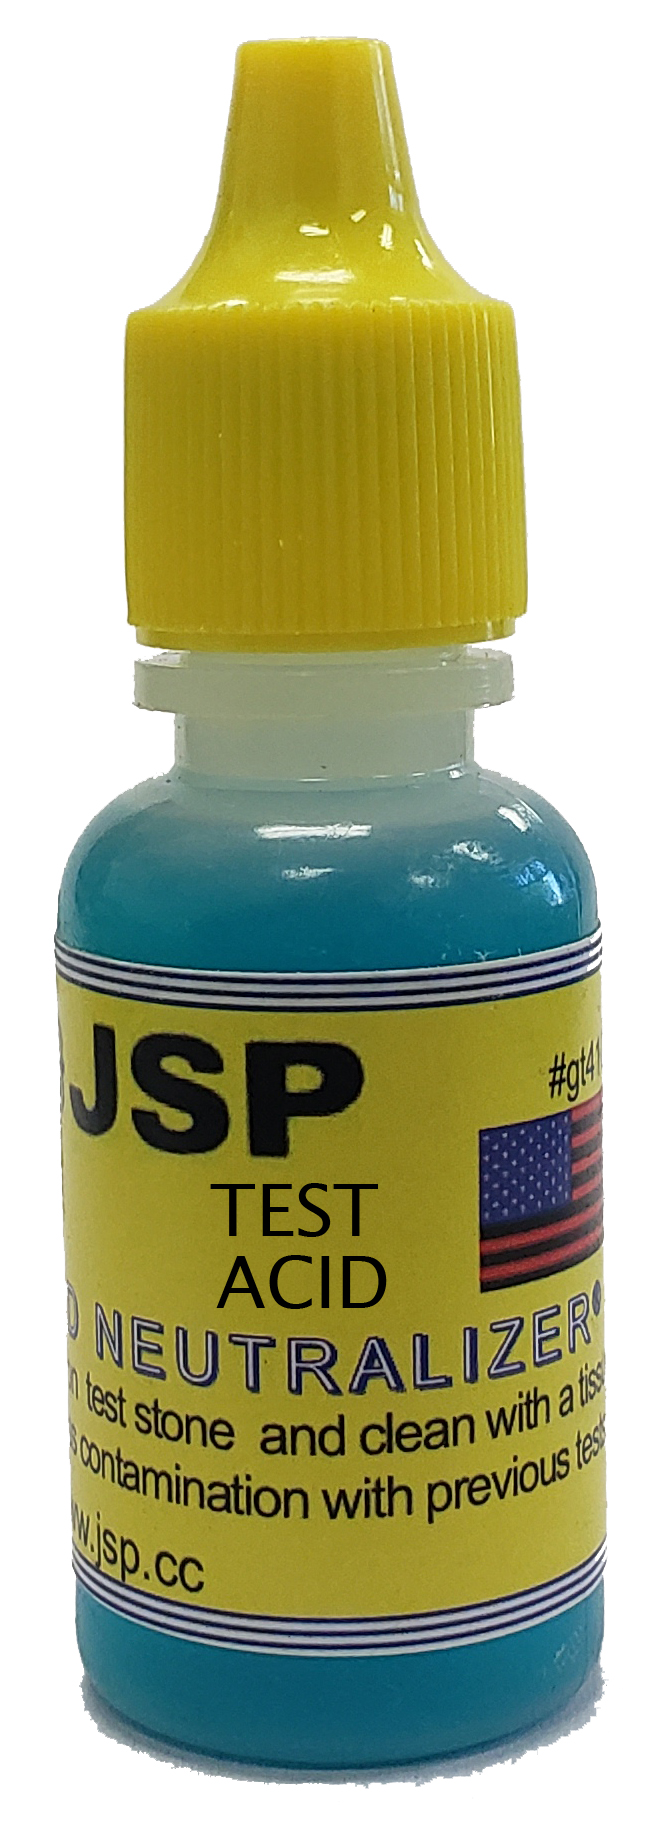 JSP TEST ACID NEUTRALIZER 1/2 OZ box of 12